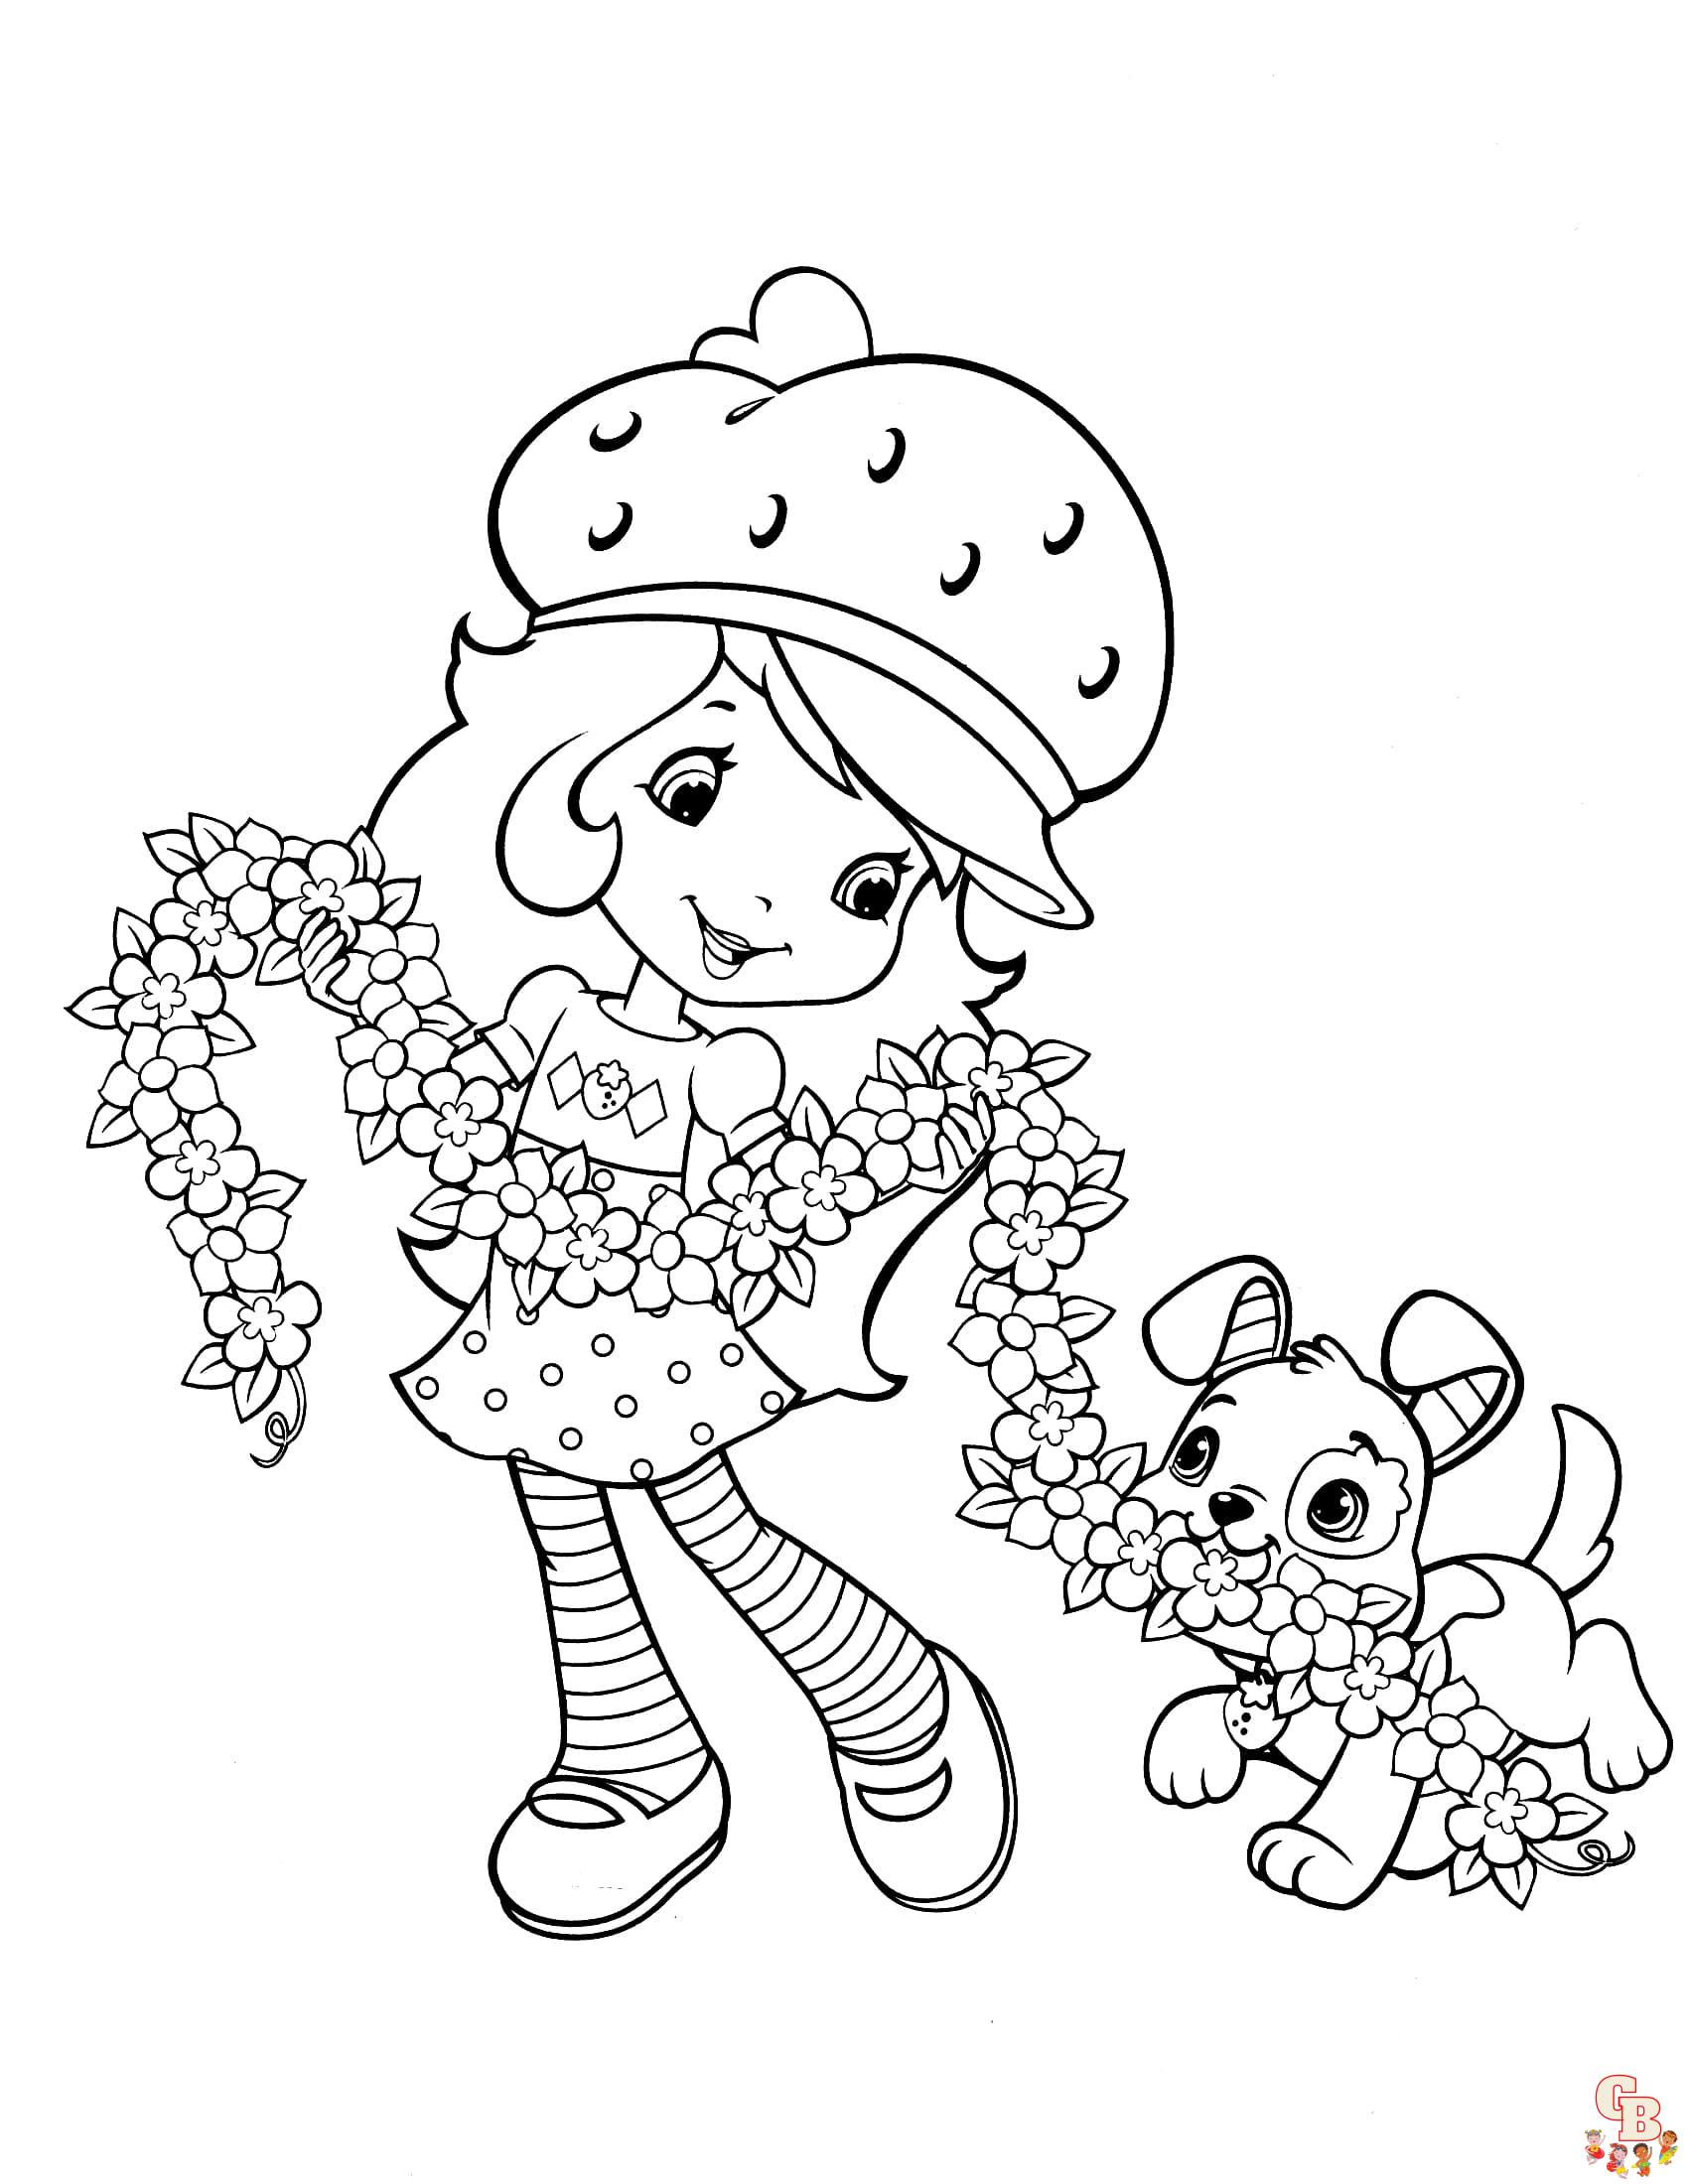 Free Printable Strawberry Shortcake Coloring Pages For Kids  Strawberry  shortcake coloring pages, Cool coloring pages, Coloring pages